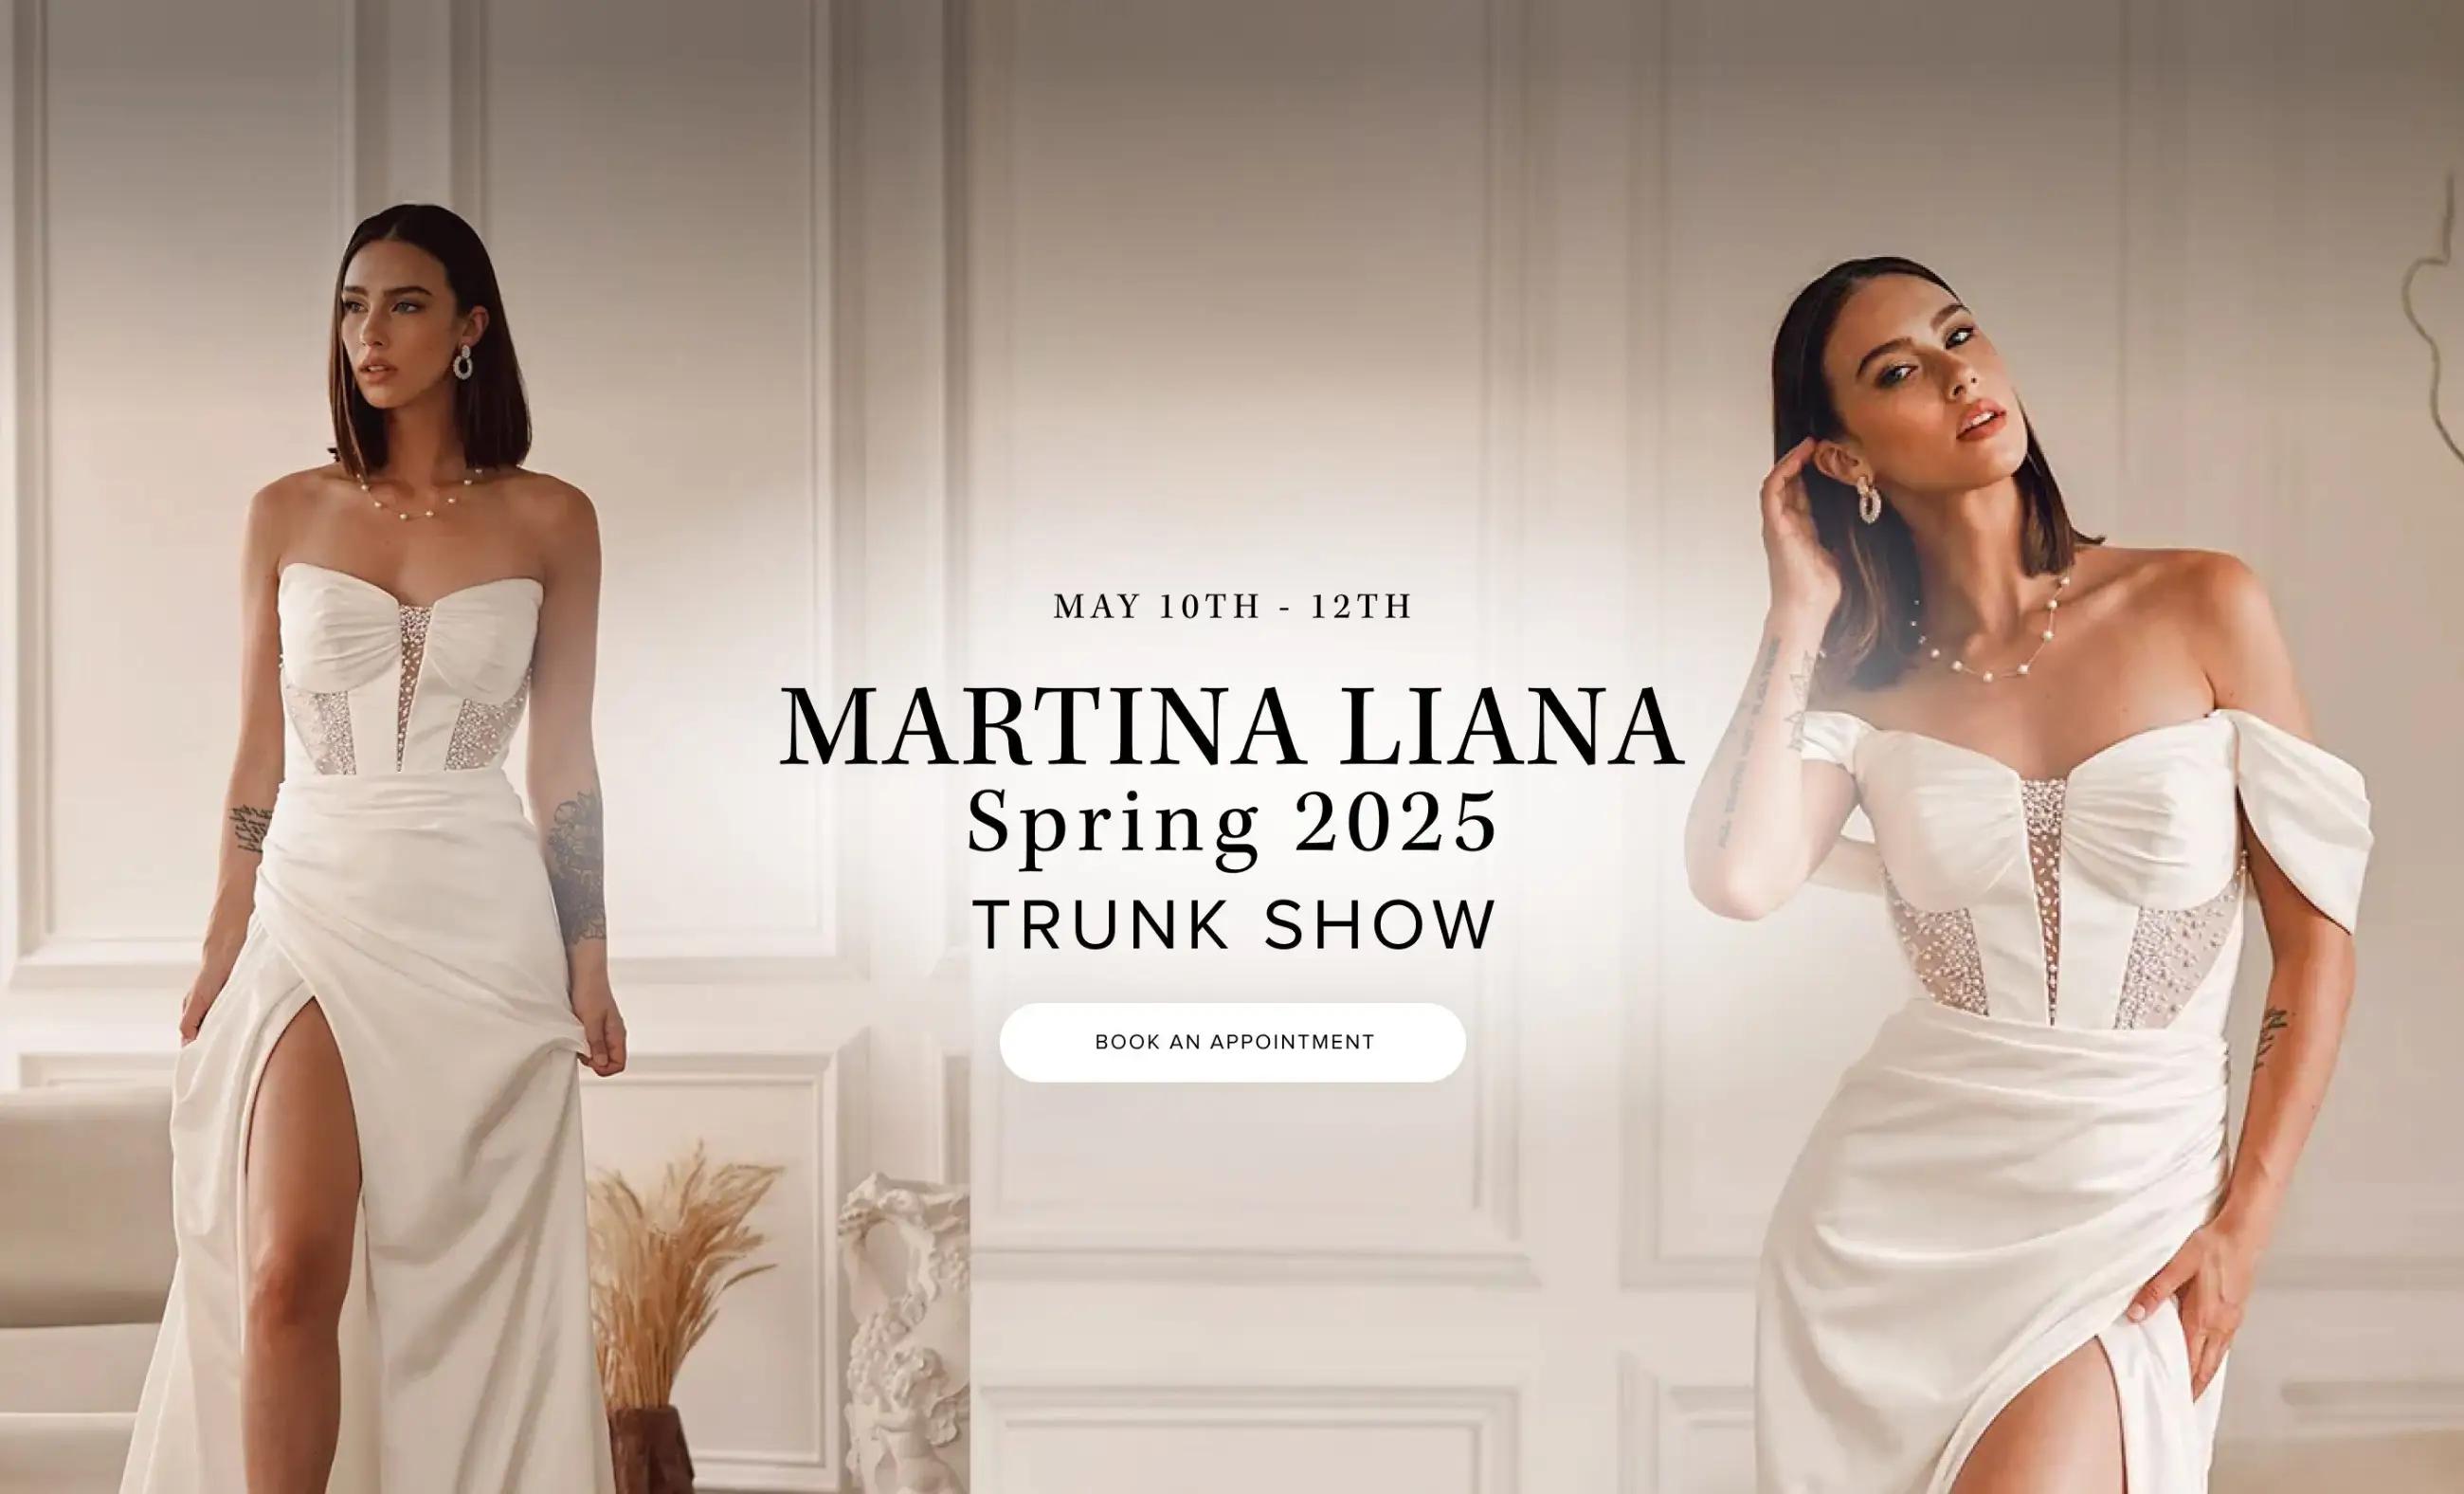 Martina Liana Trunk Show desktop banner